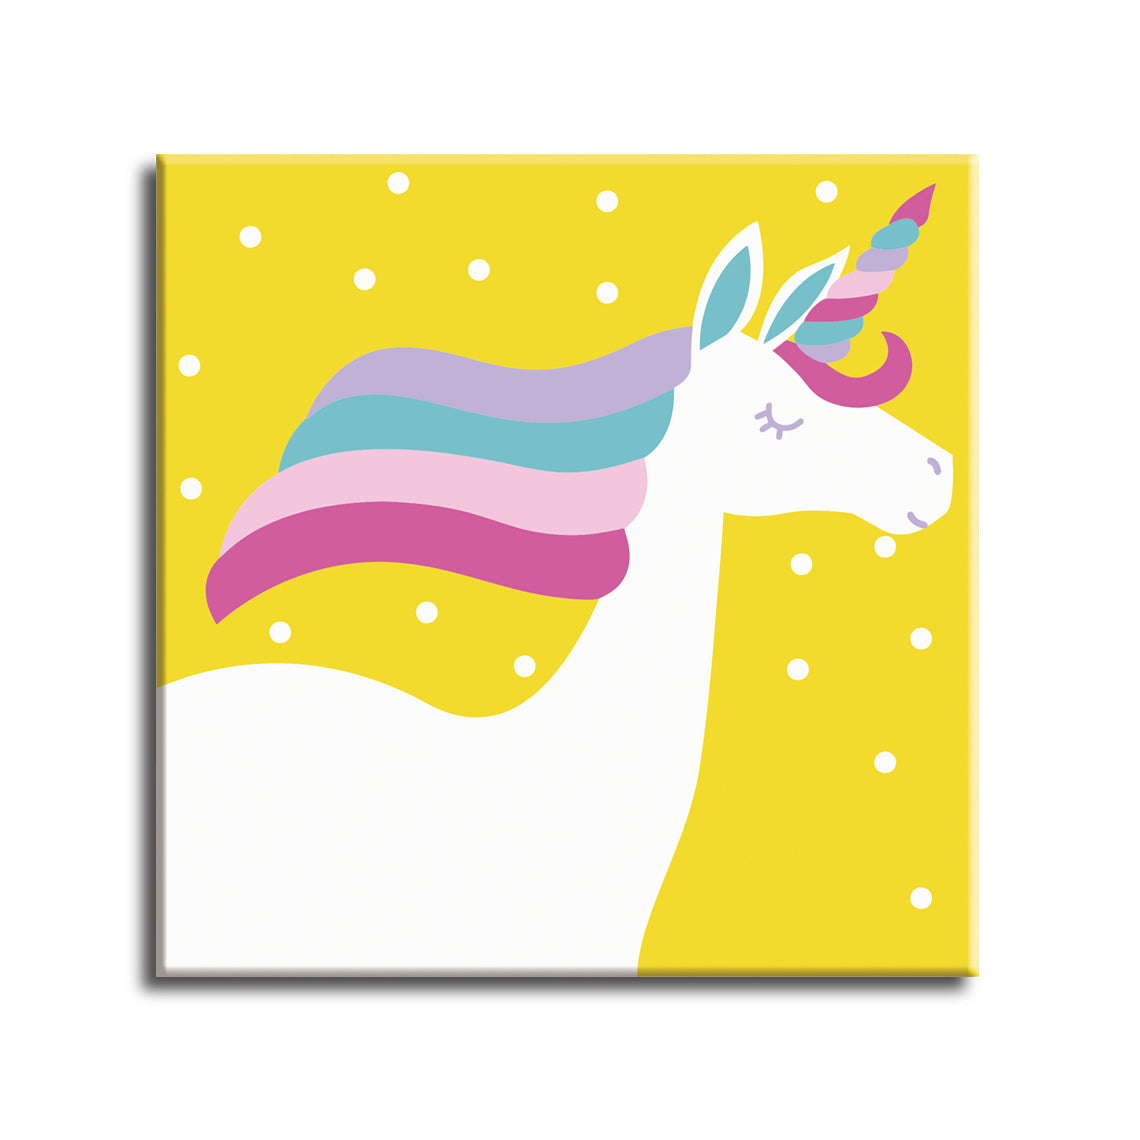 Unicorn Canvas Paint Art Kit